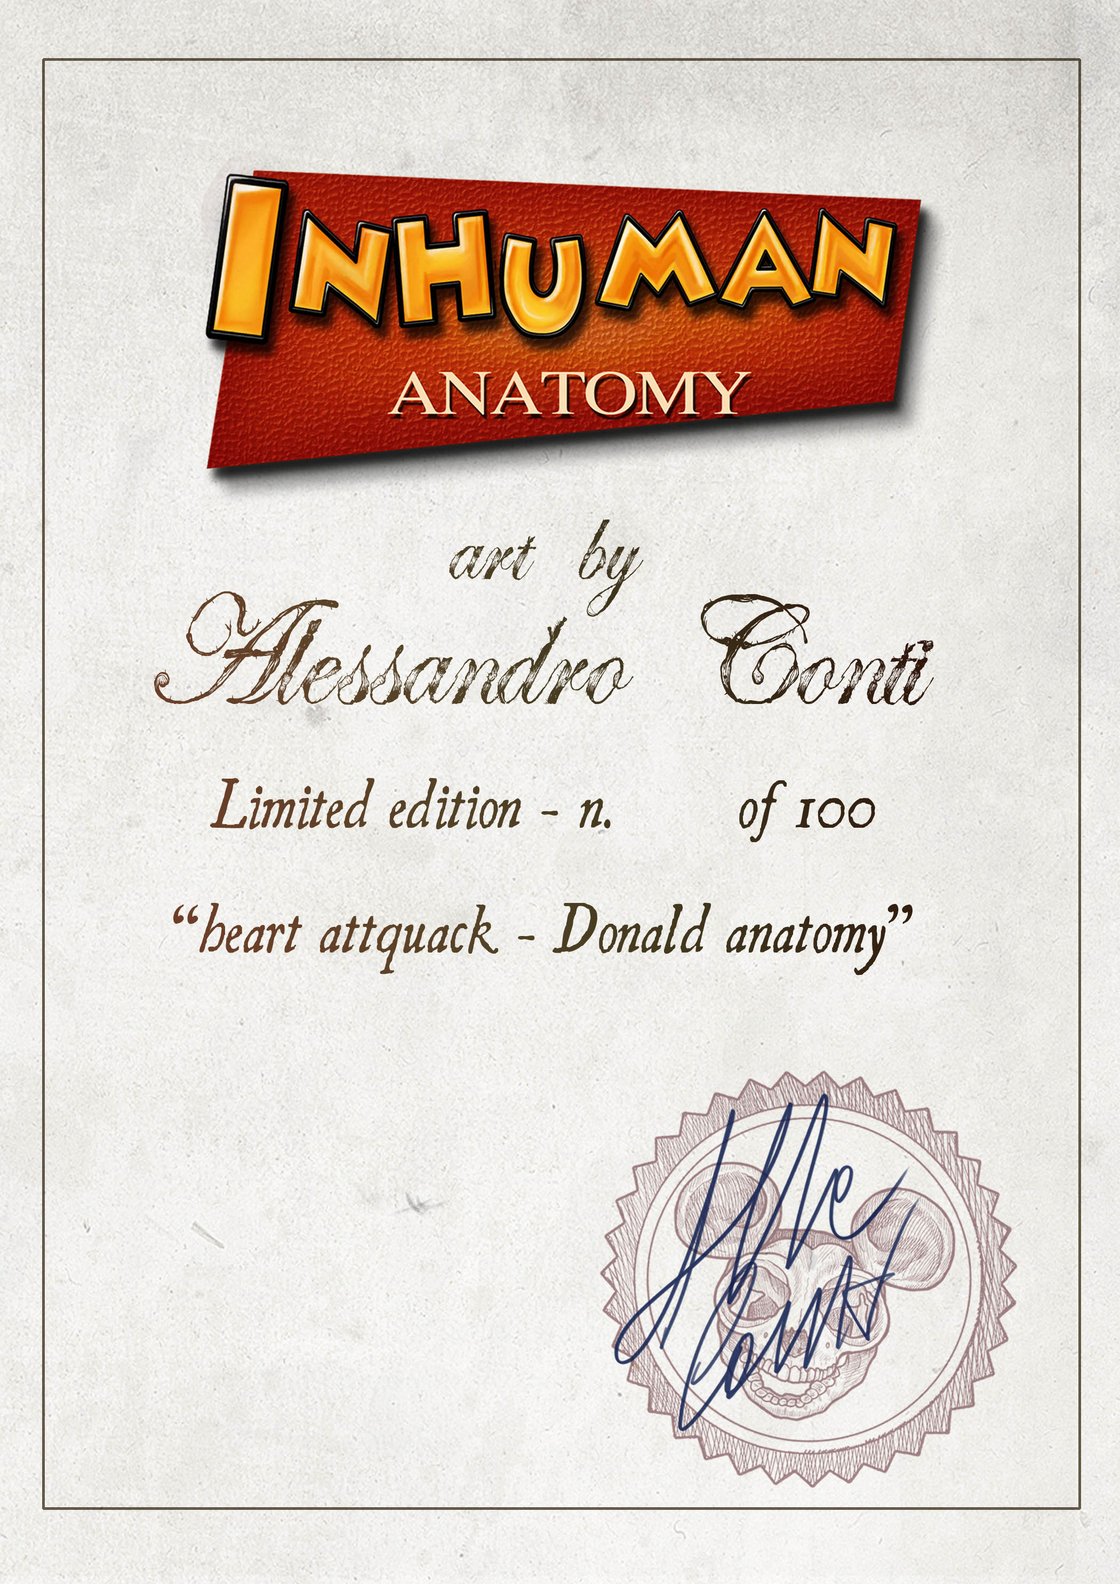 Image of INHUMAN ANATOMY - Donald's anatomy - limited edition of 100 - Giclèe print on fine art canvas